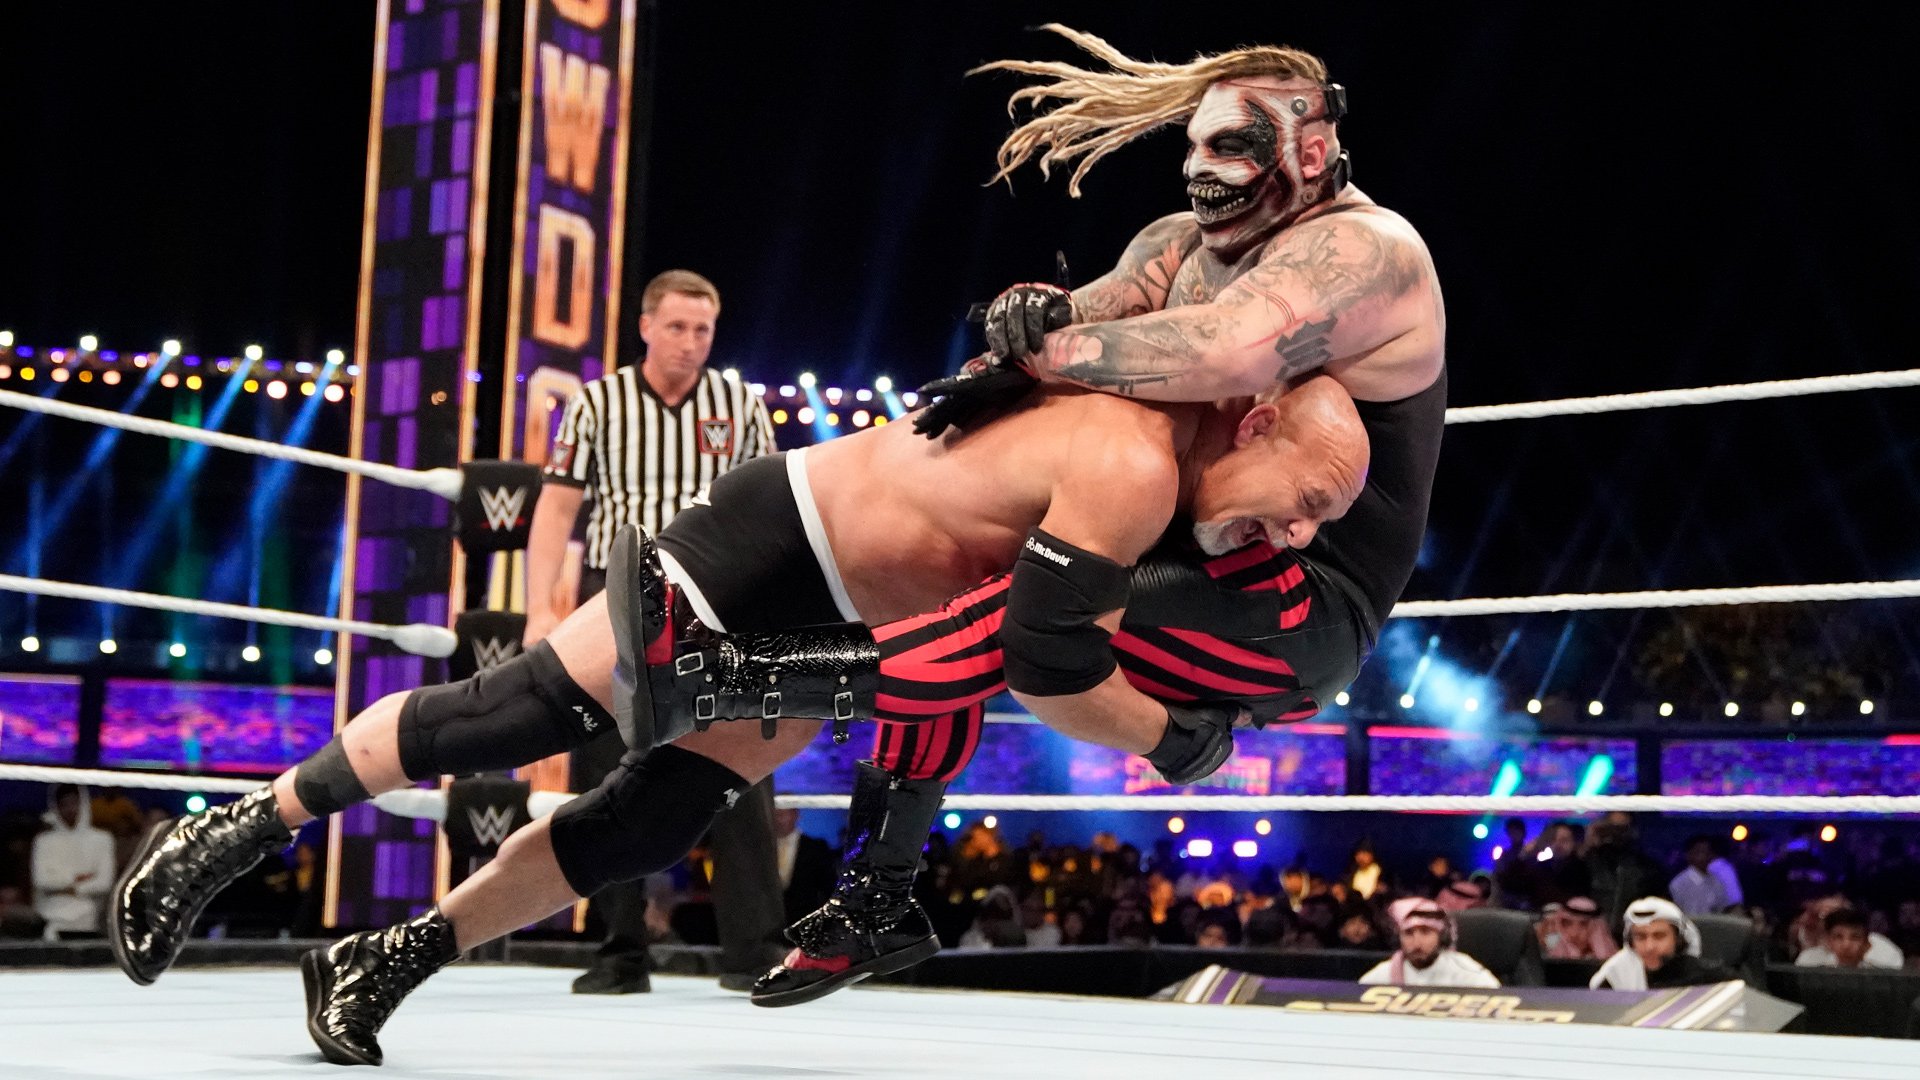 Goldberg def. “The Fiend” Bray Wyatt to become the new Universal Champion